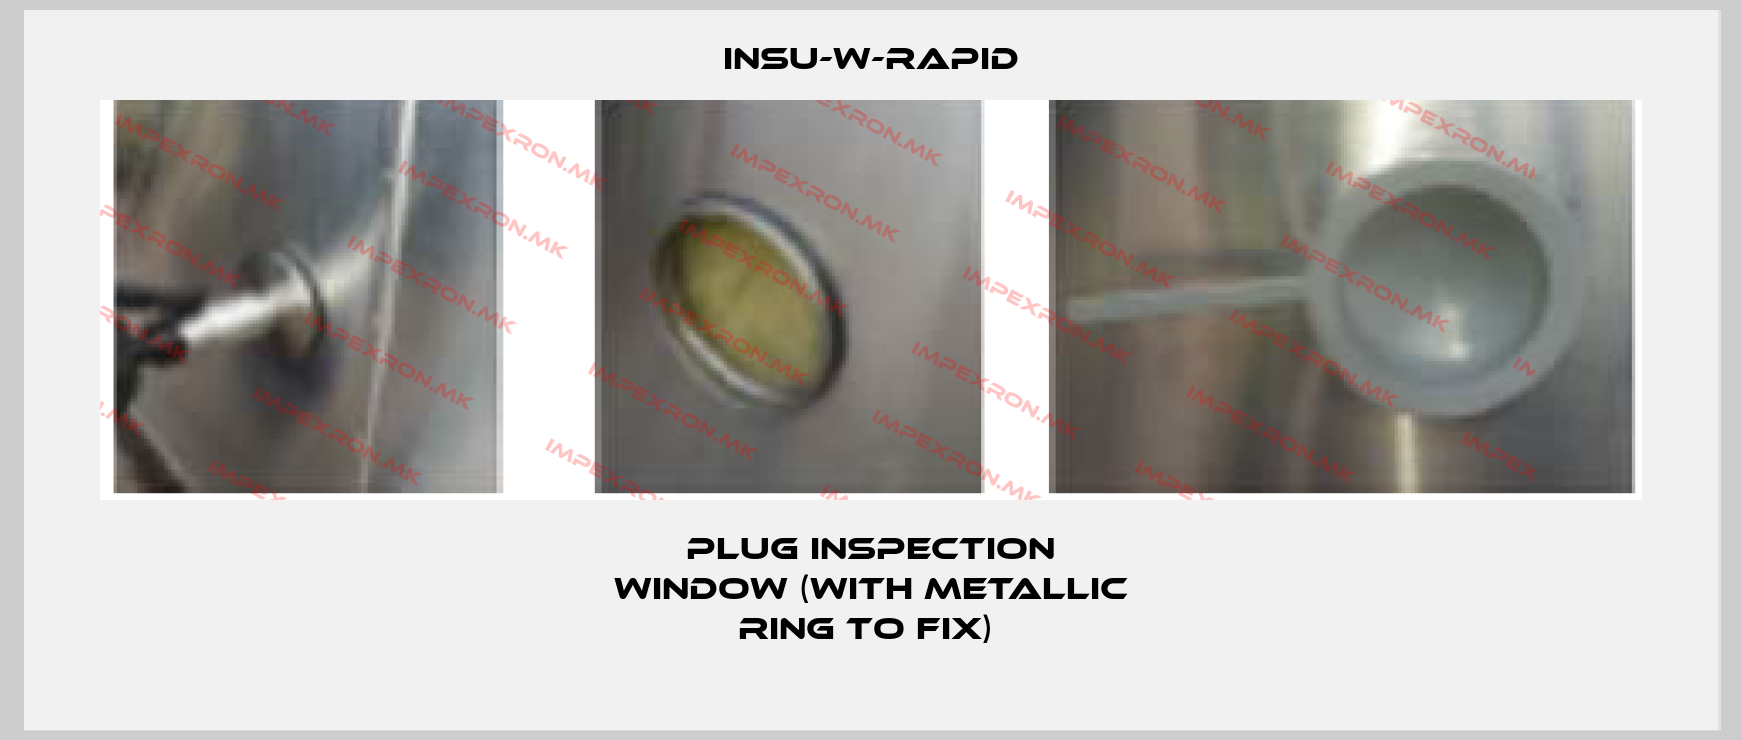 INSU-W-RAPID-Plug Inspection Window (with metallic ring to fix) price